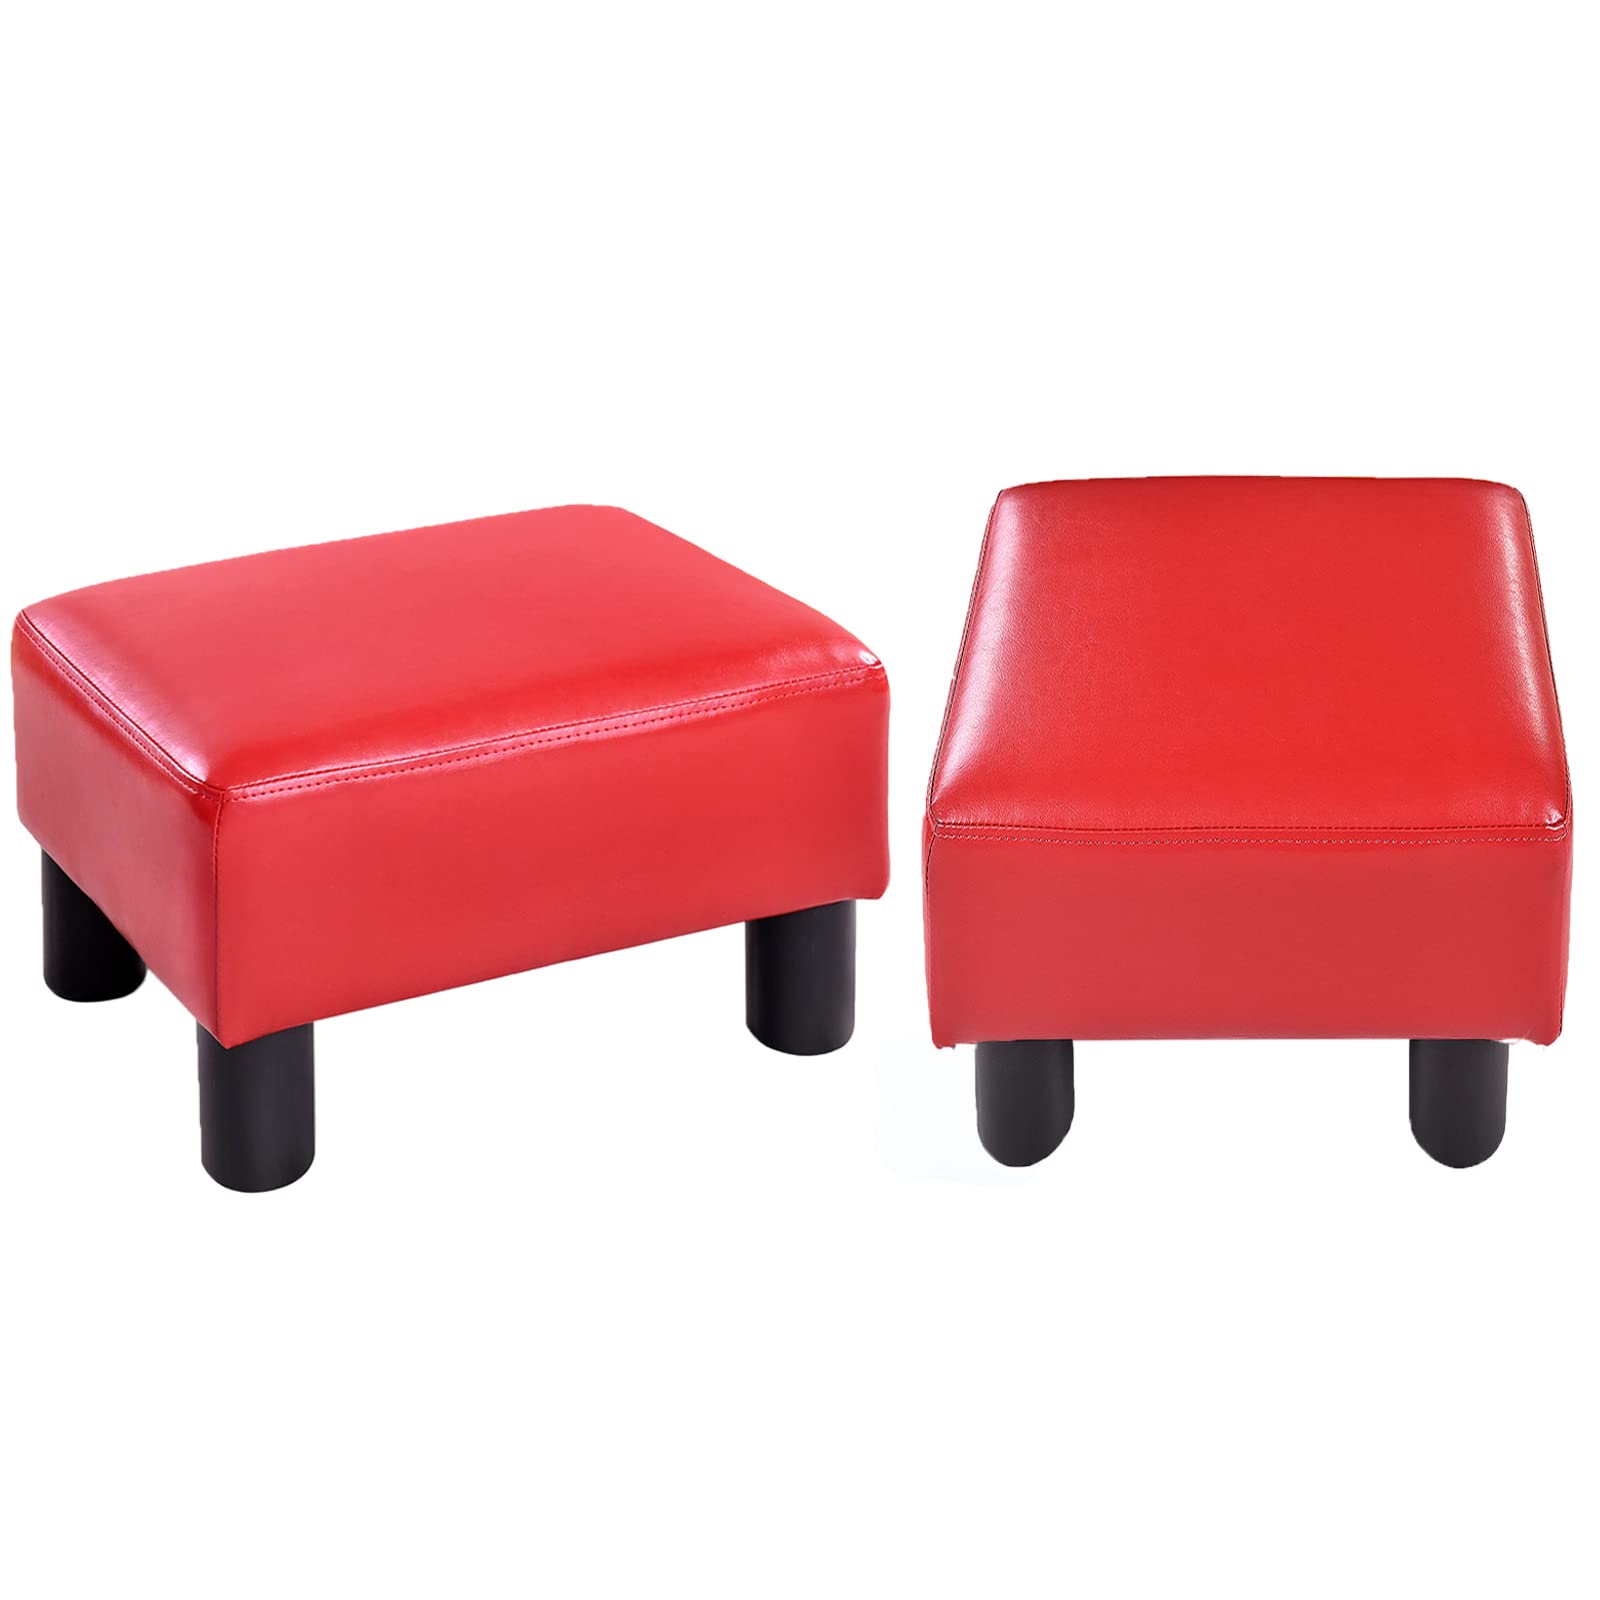 Giantex 16" Small Footstool PU Leather Ottoman Footrest Modern